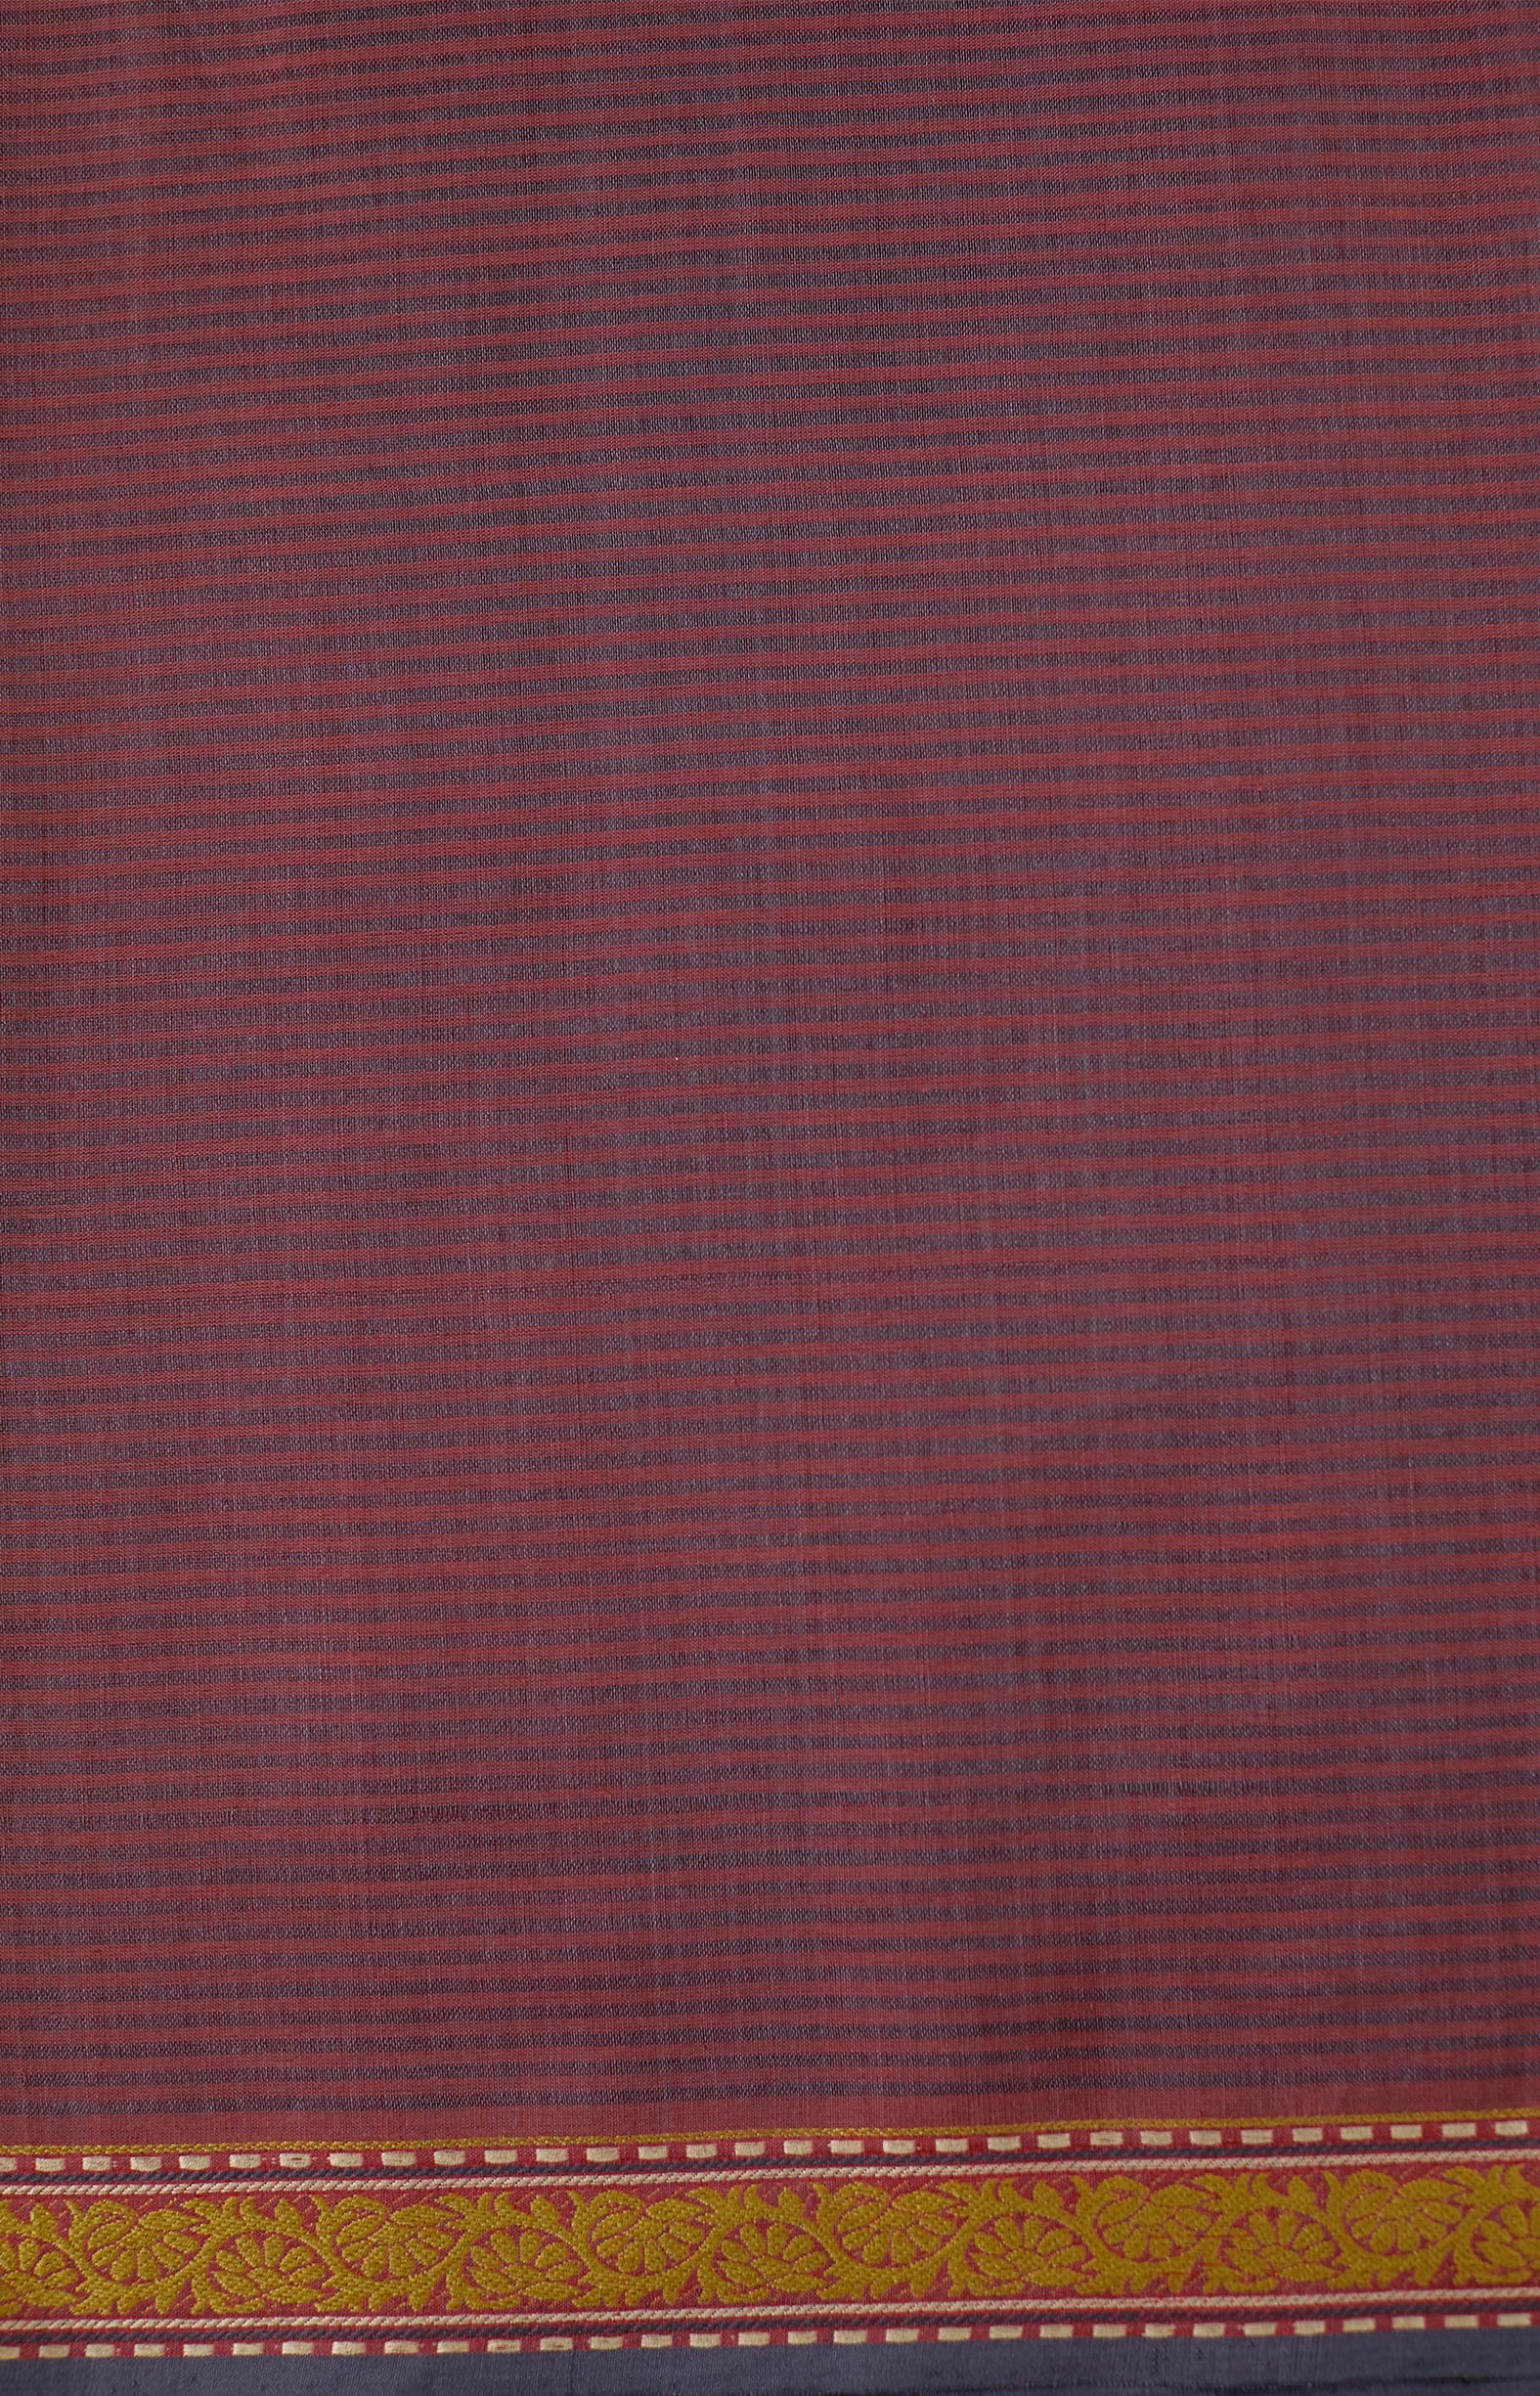 Red, Handwoven Organic Cotton, Plain Weave , Jacquard, Work Wear, Striped Saree